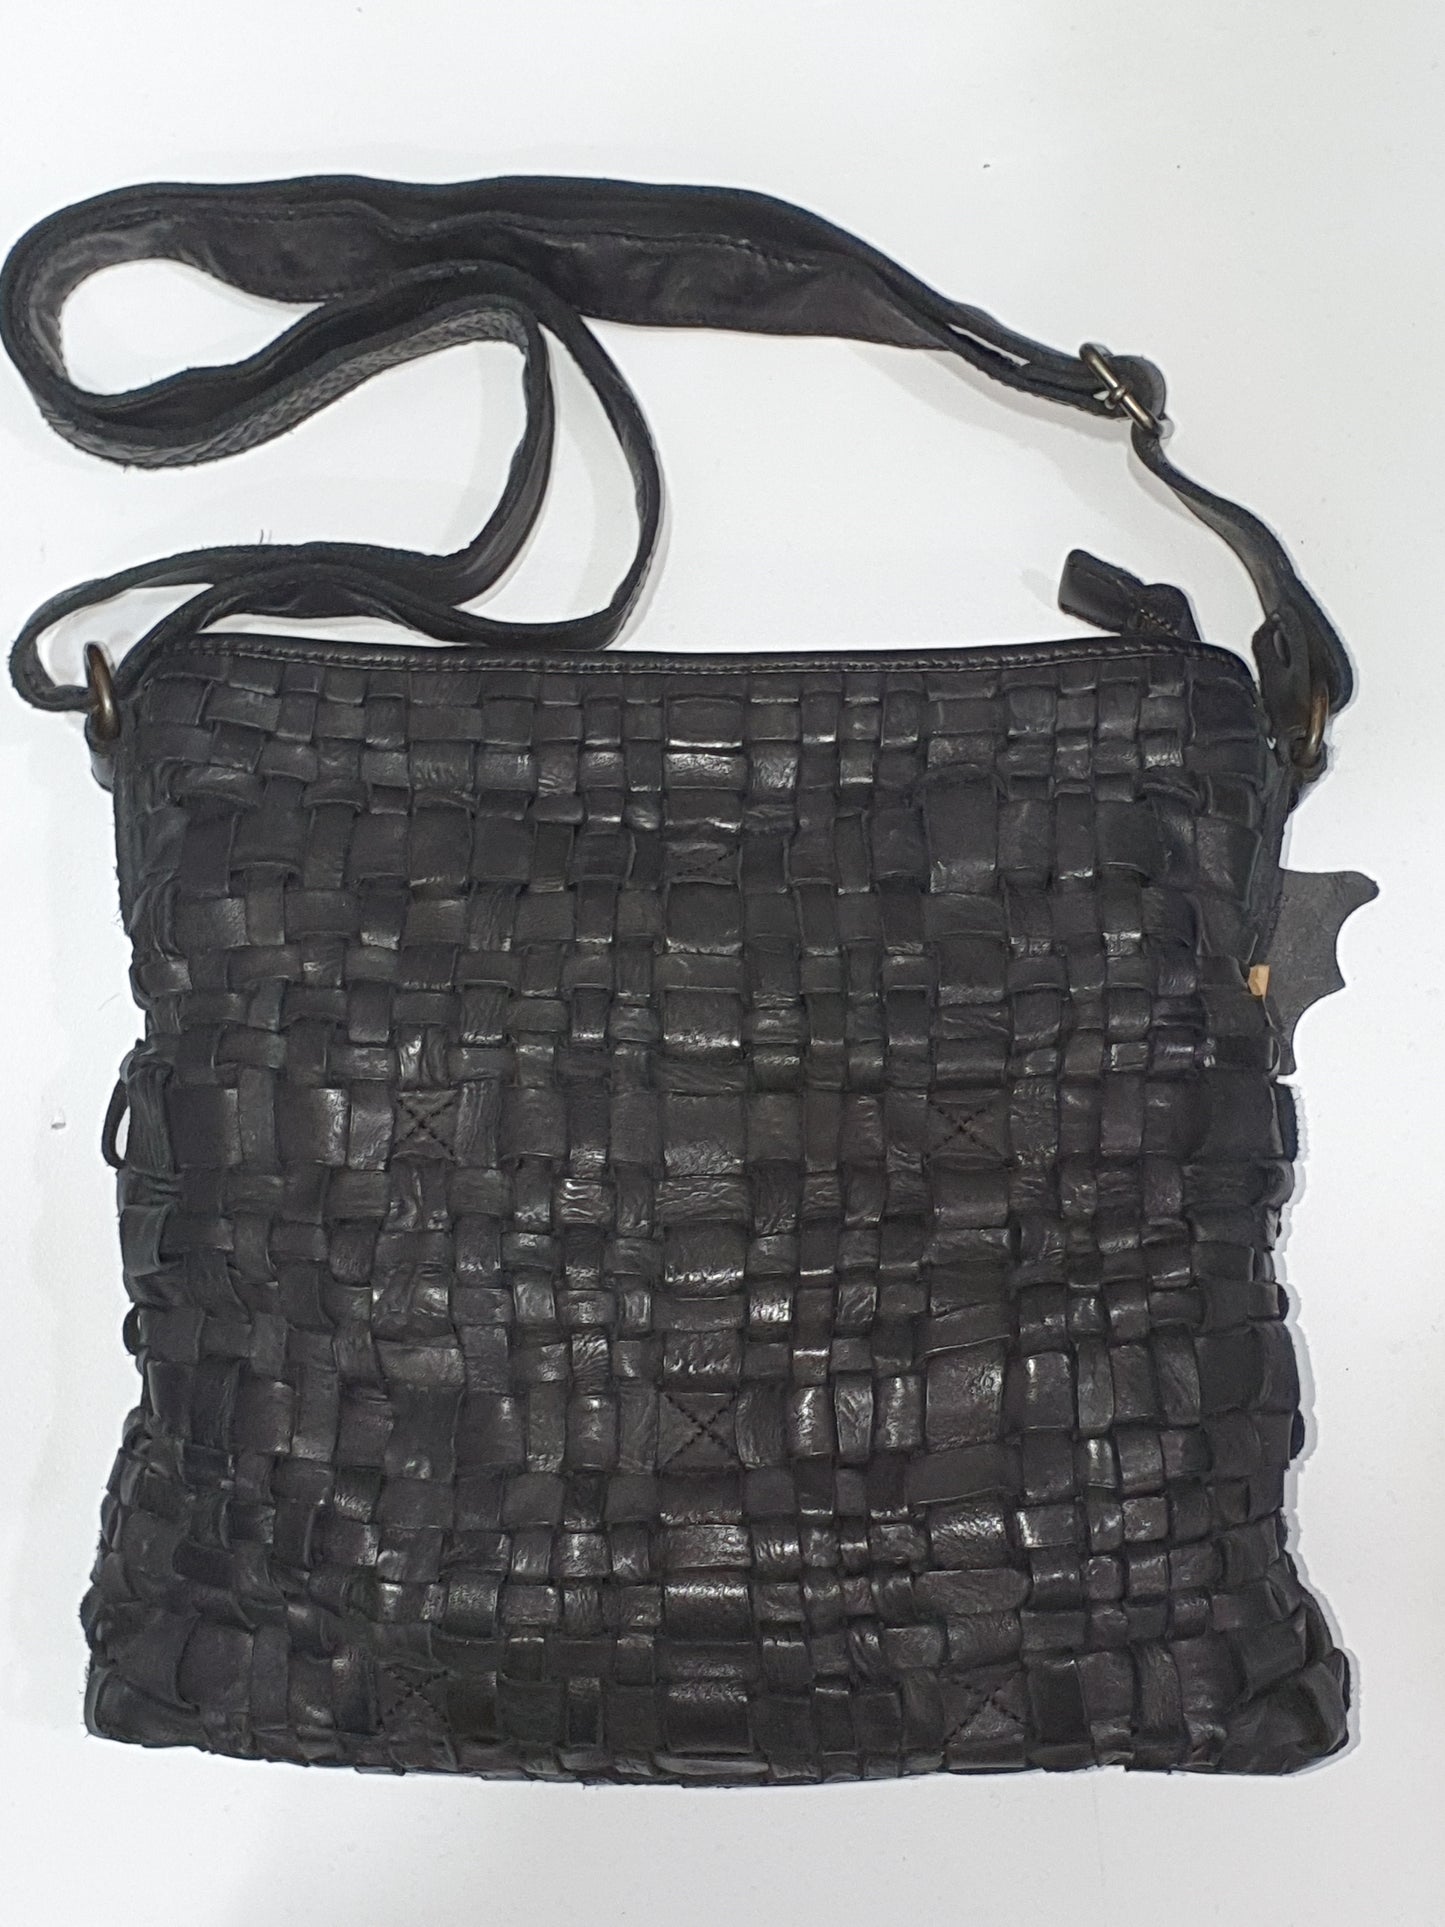 Oran Zara Women's Woven Leather Crossbody Bag - rainbowbags